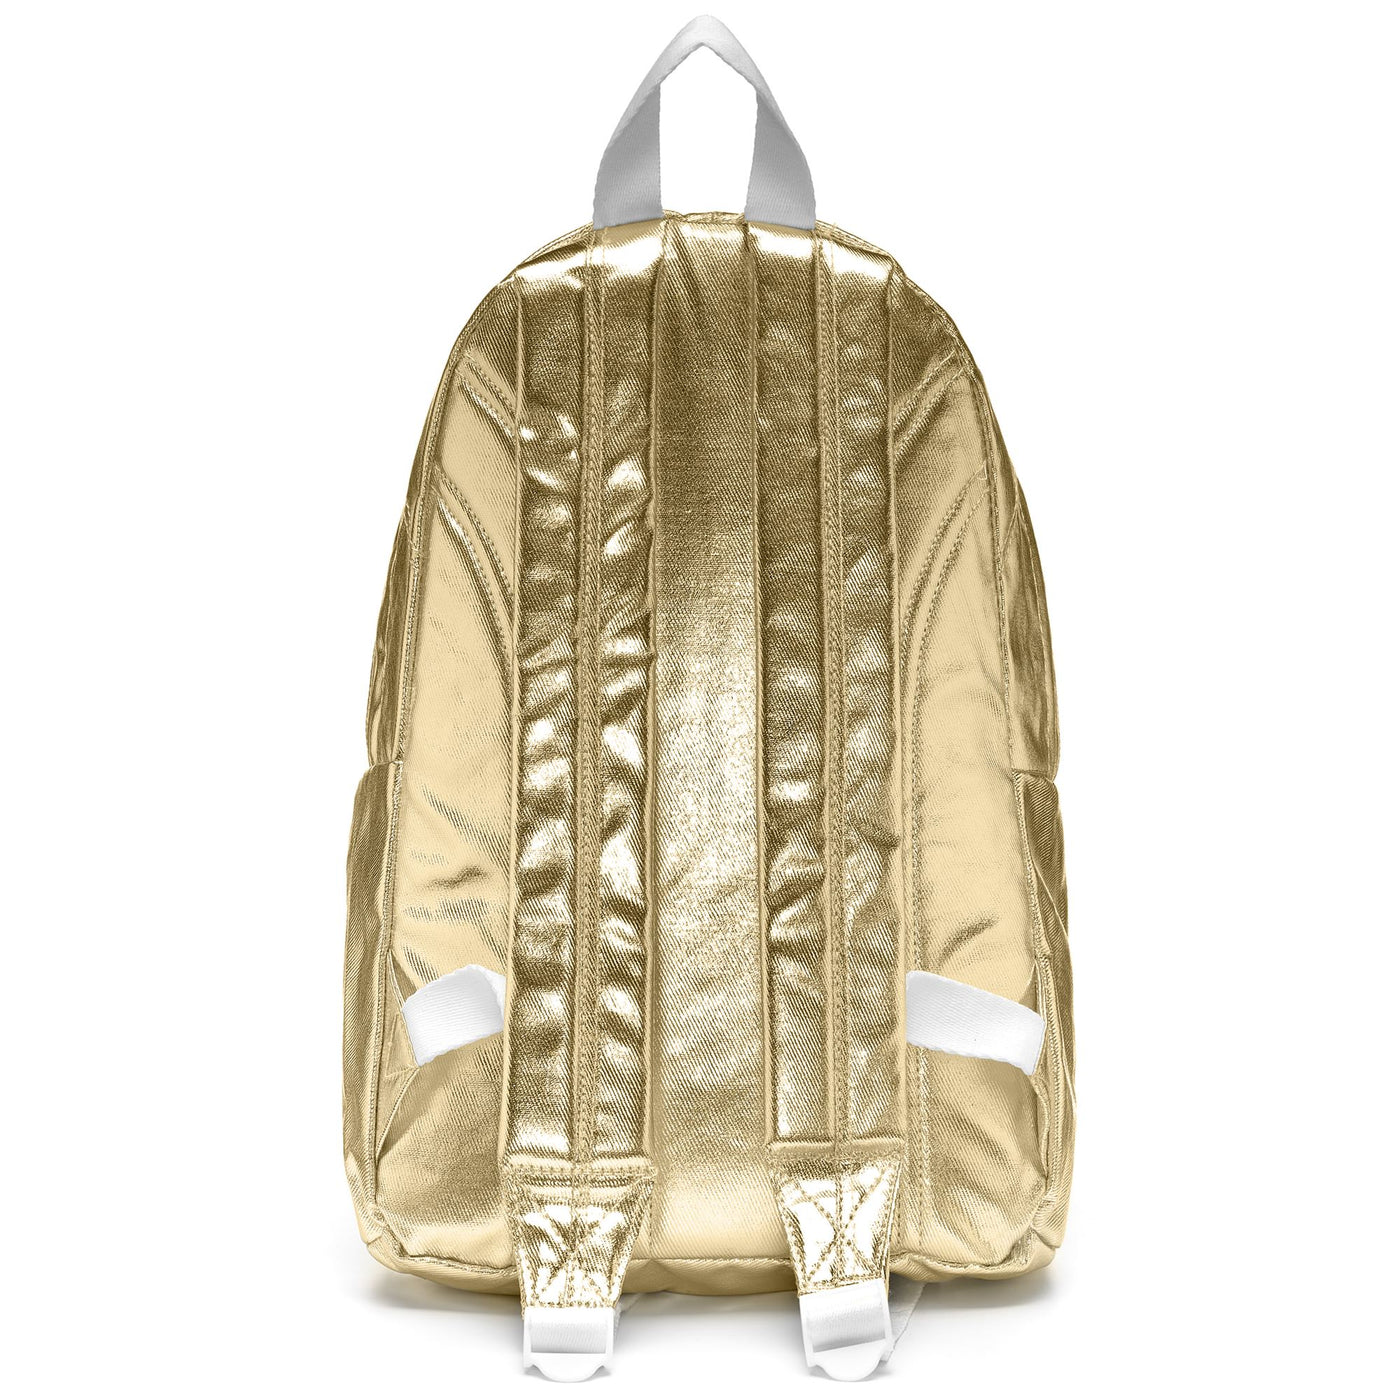 Bags Woman MINI BACKPACK METALLIC Backpack YELLOW GOLD Dressed Front (jpg Rgb)	